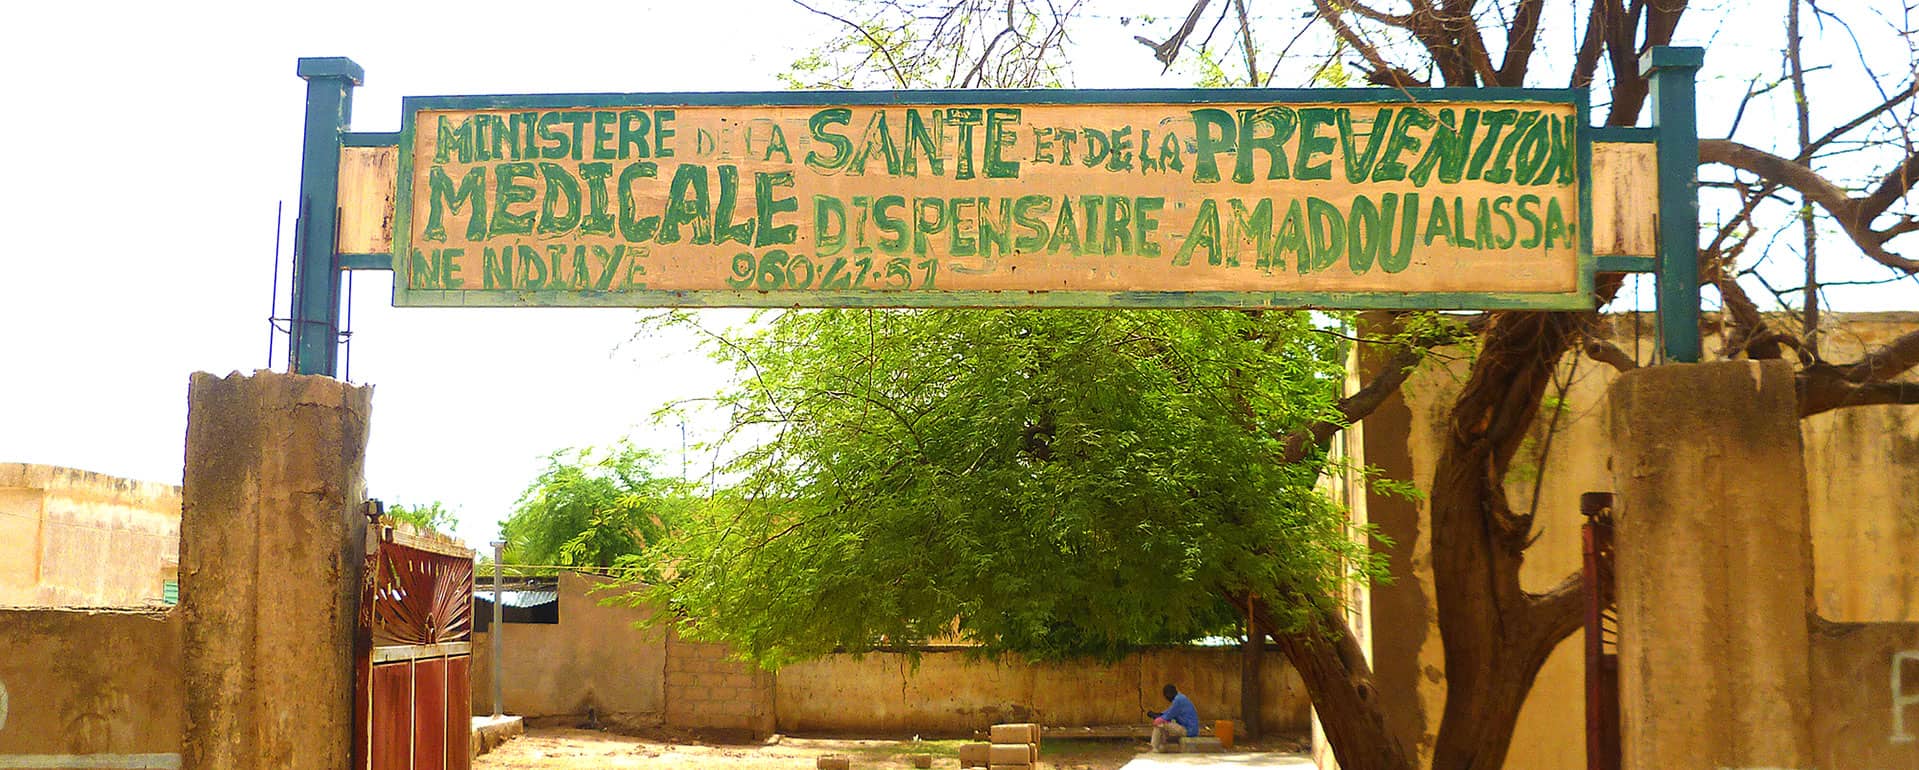 Wouro-allyson Sénégal 02